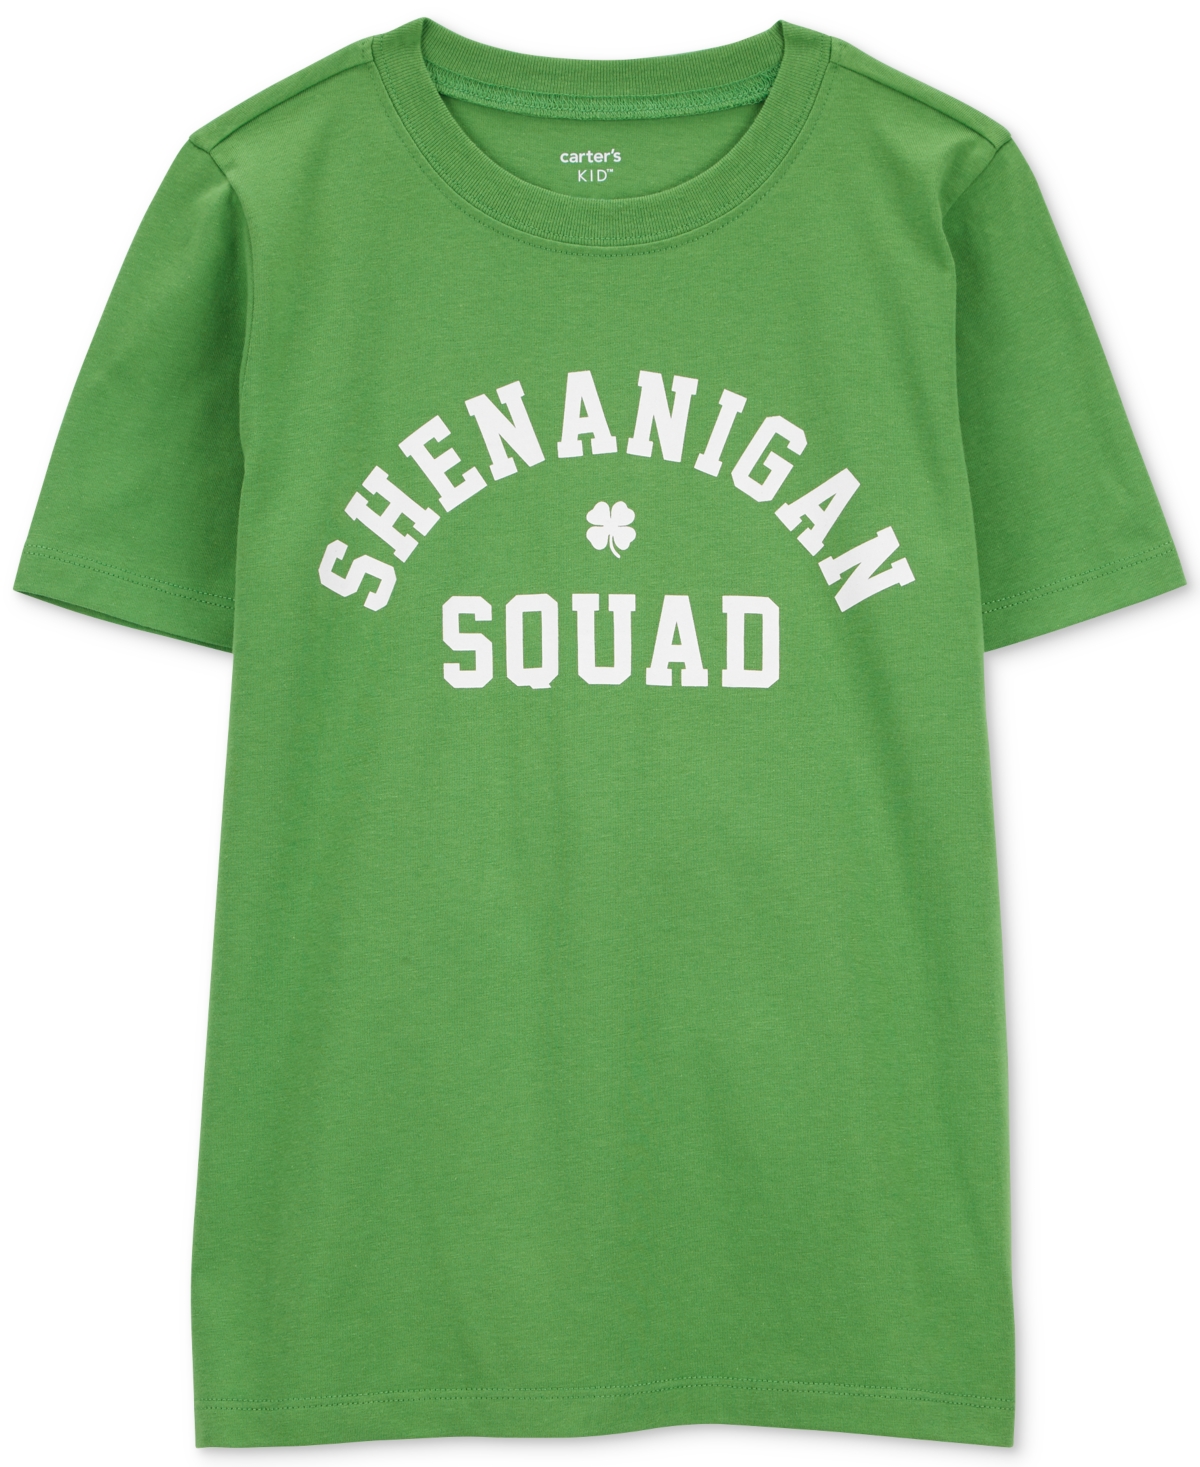 Carter's Kids' Big Boys Shenanigan Squad Graphic T-shirt In Green